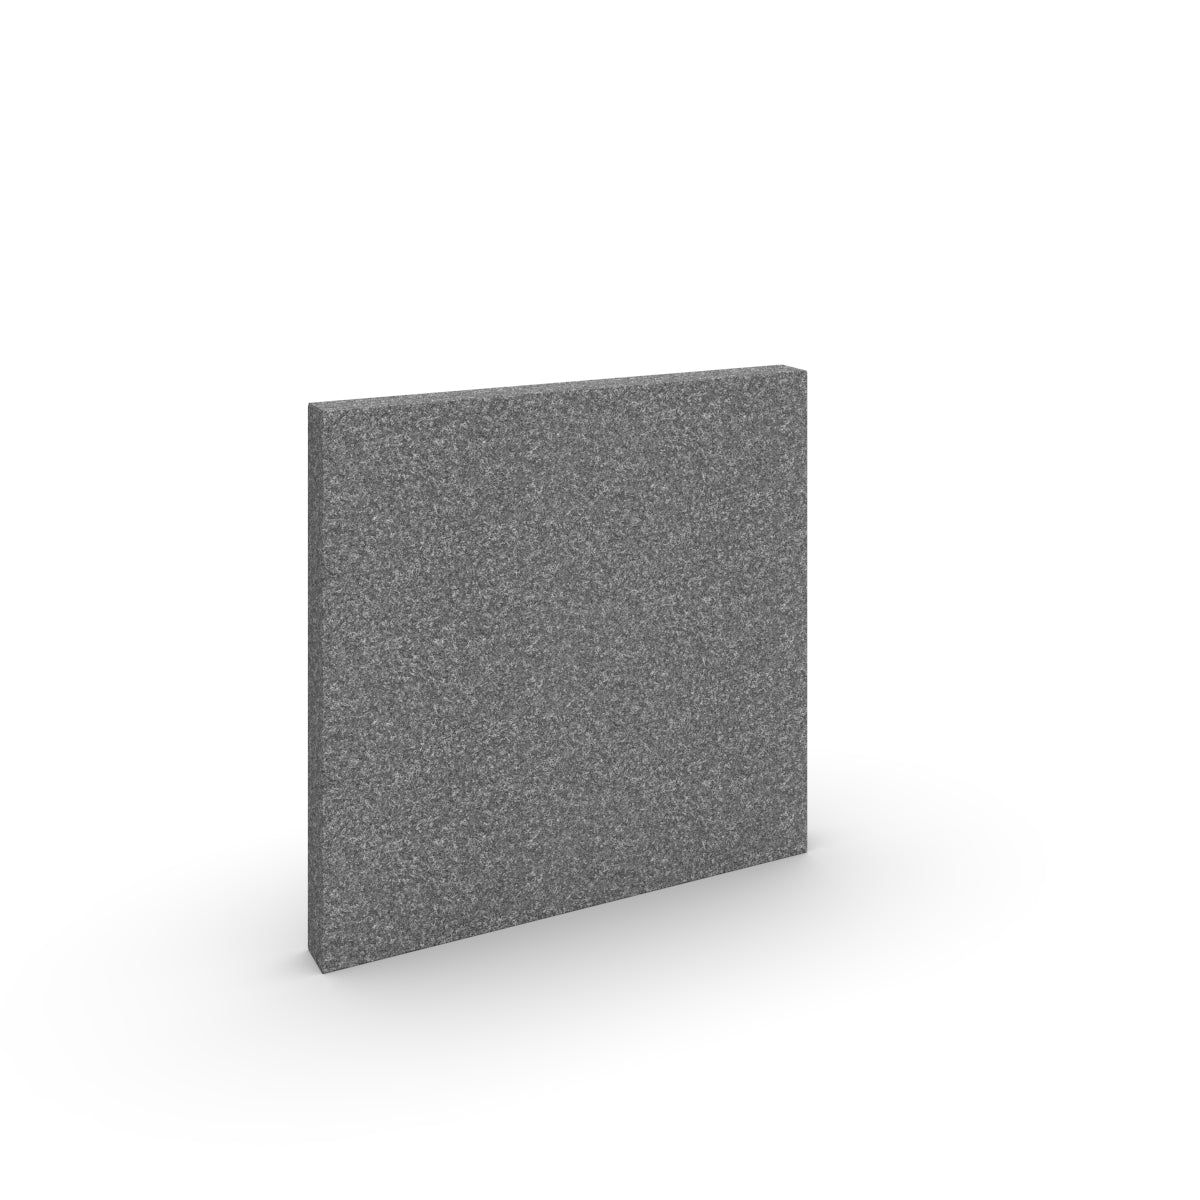 Square Basic wall sound absorber in dark grey acoustic wool felt. Akustikkplater og lyddemping vegg